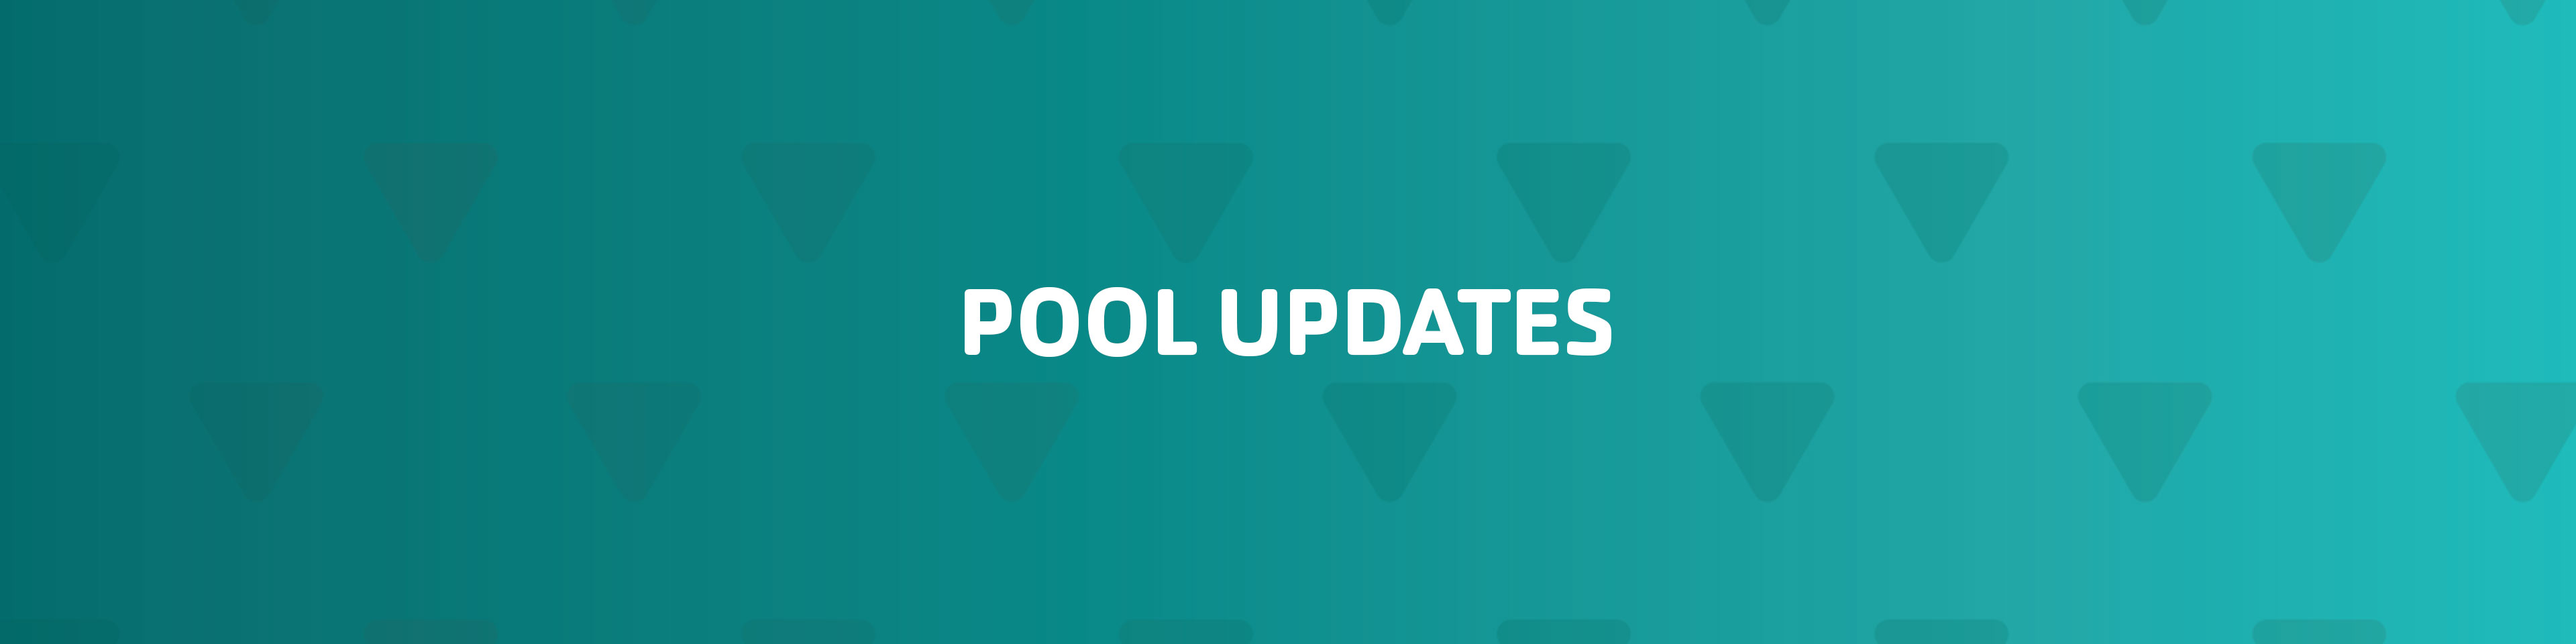 Pool Updates